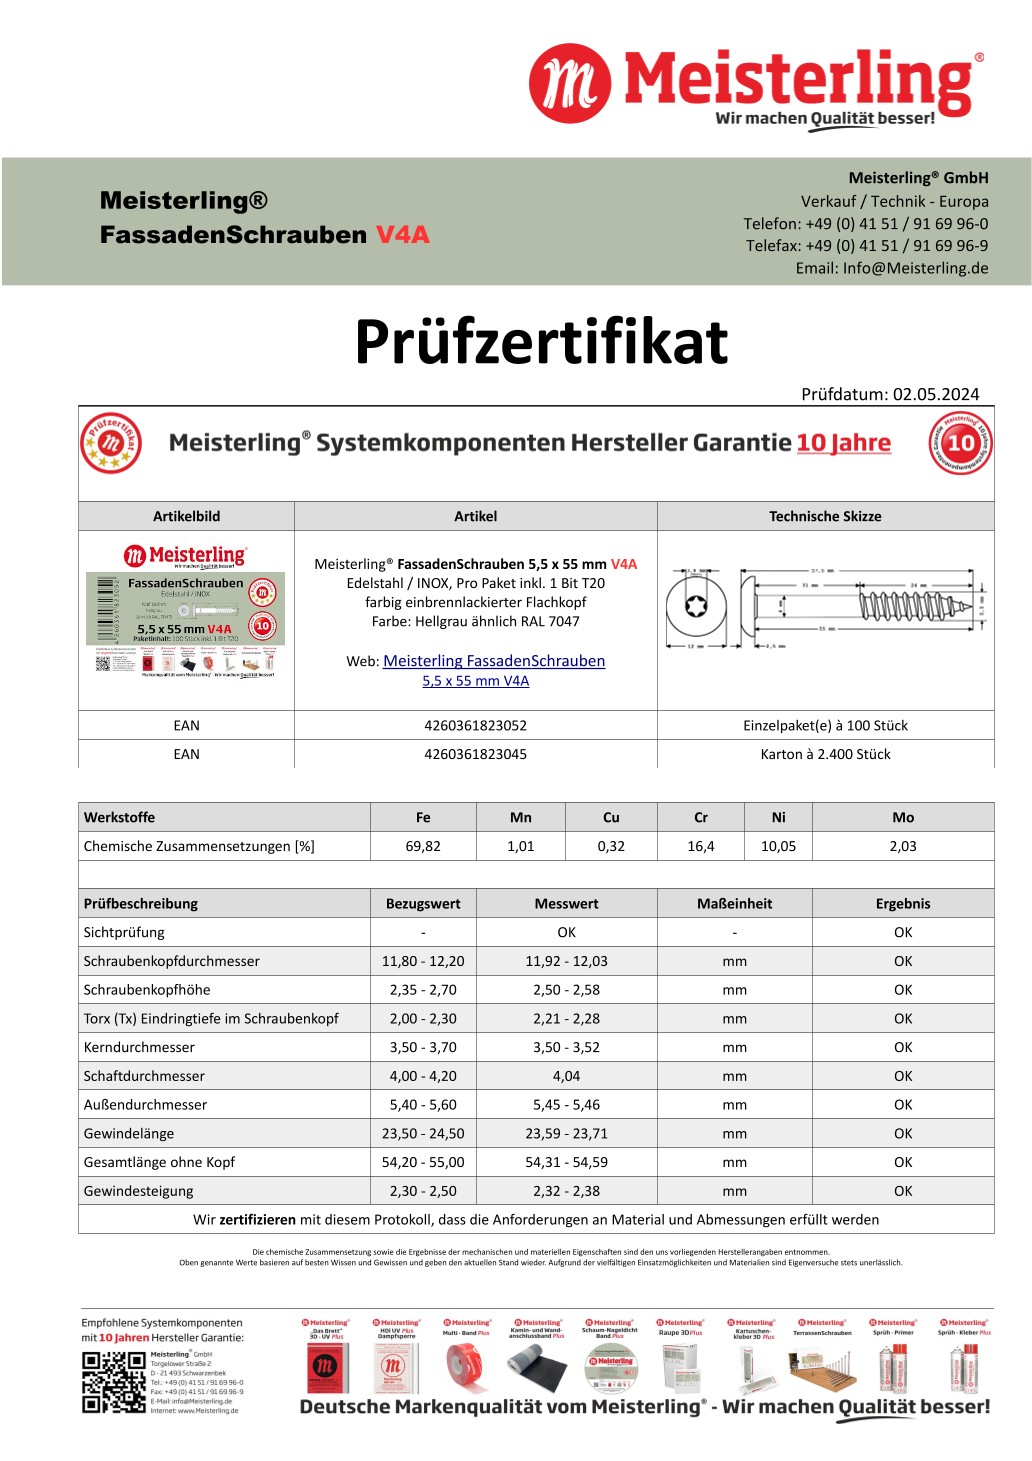 Prüfzertifikat Meisterling® FassadenSchrauben 5,5 x 55 mm V4a hellgrau